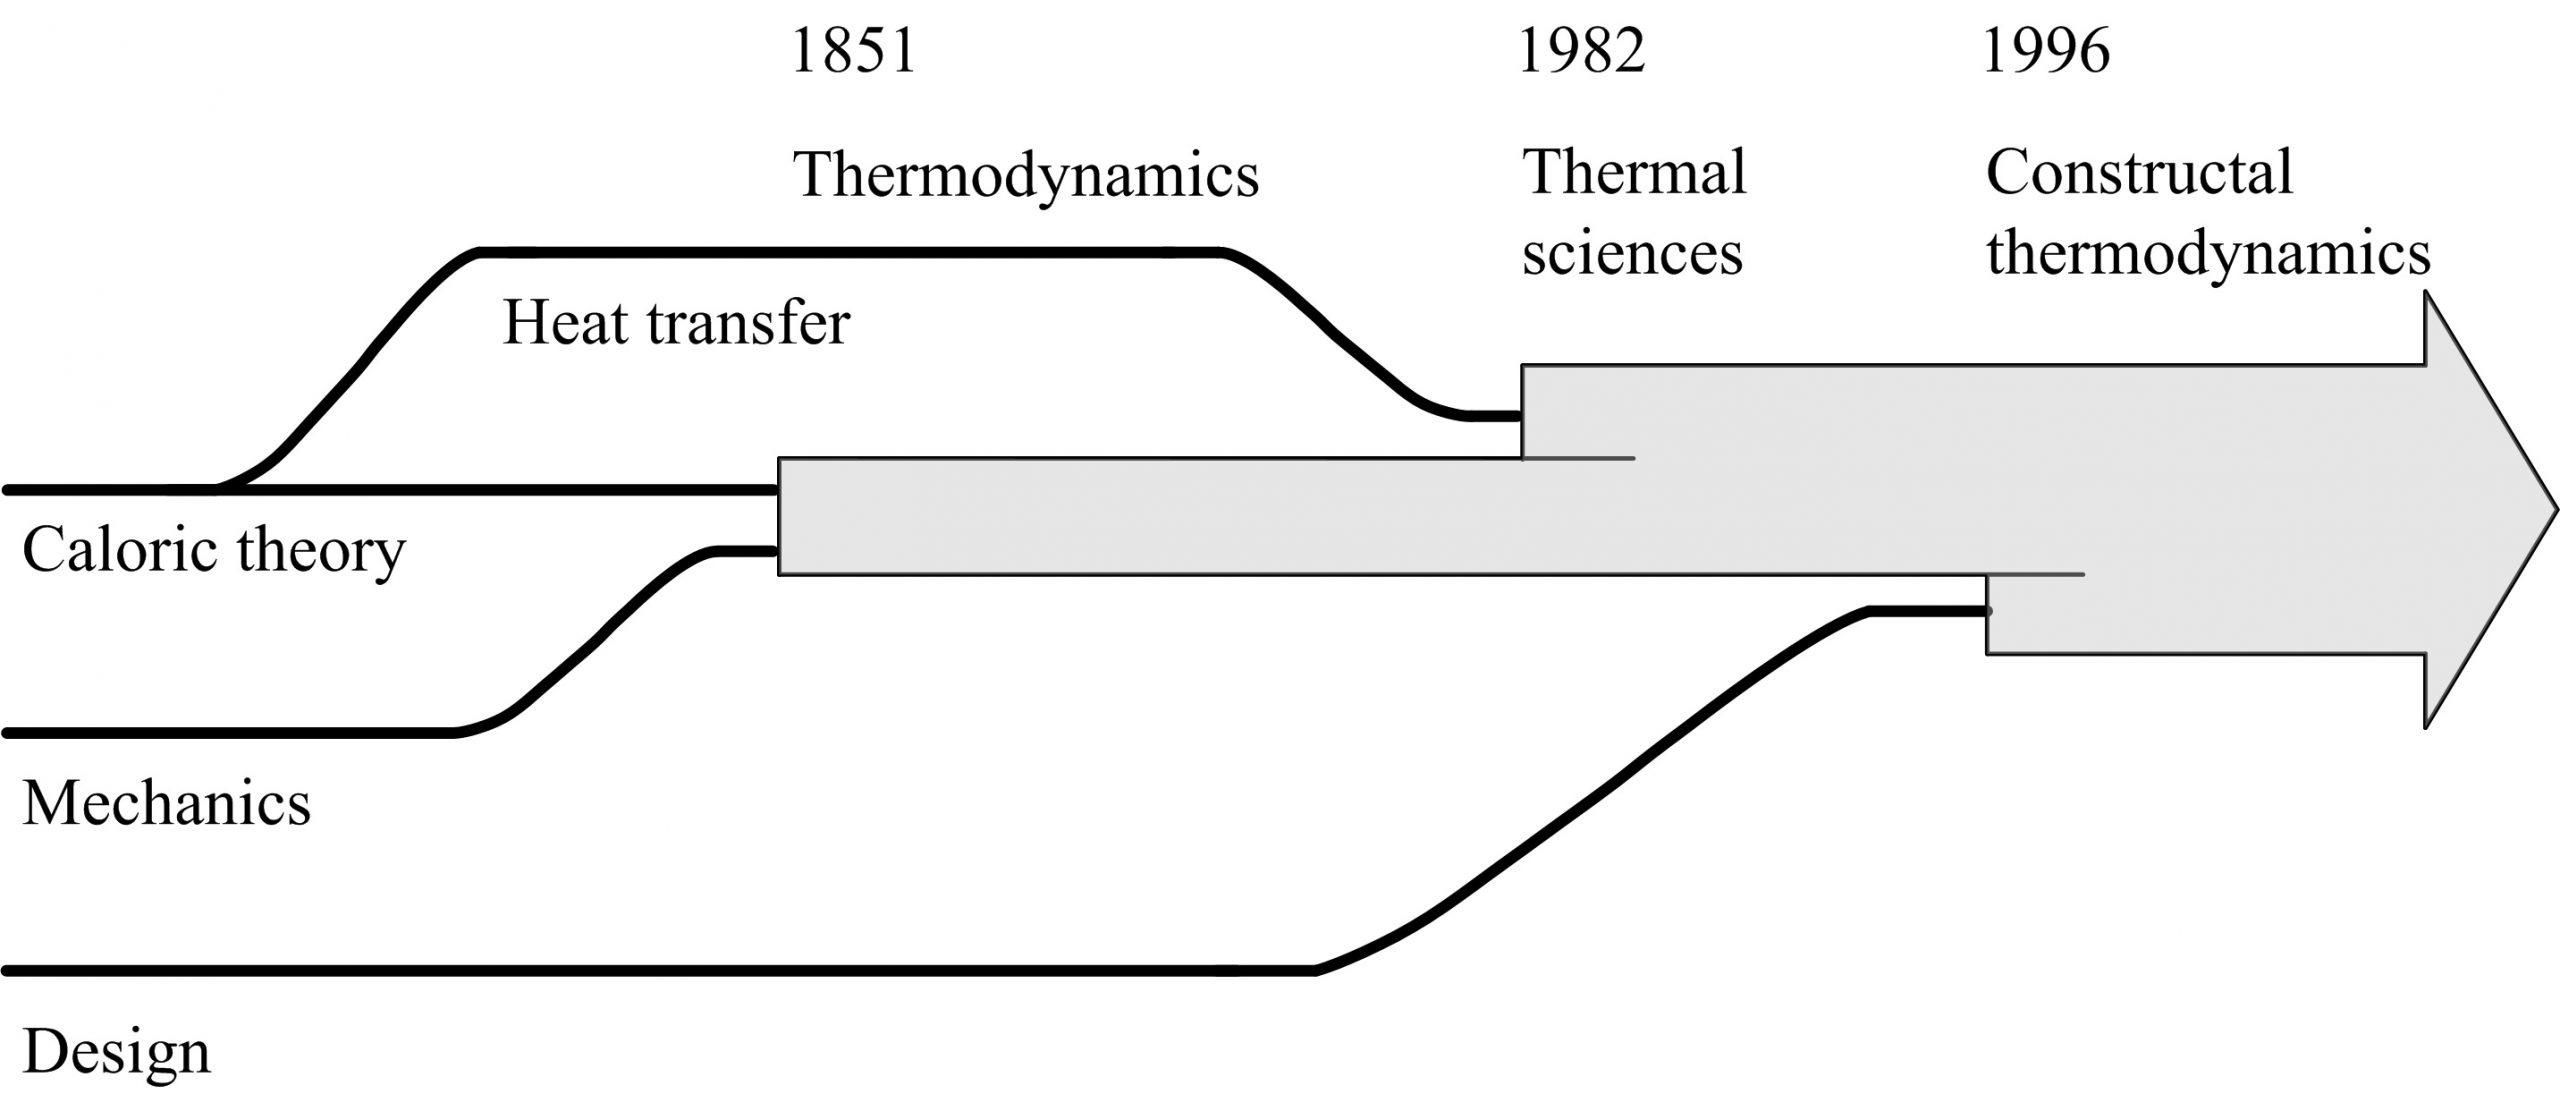 Constructal Thermodynamics